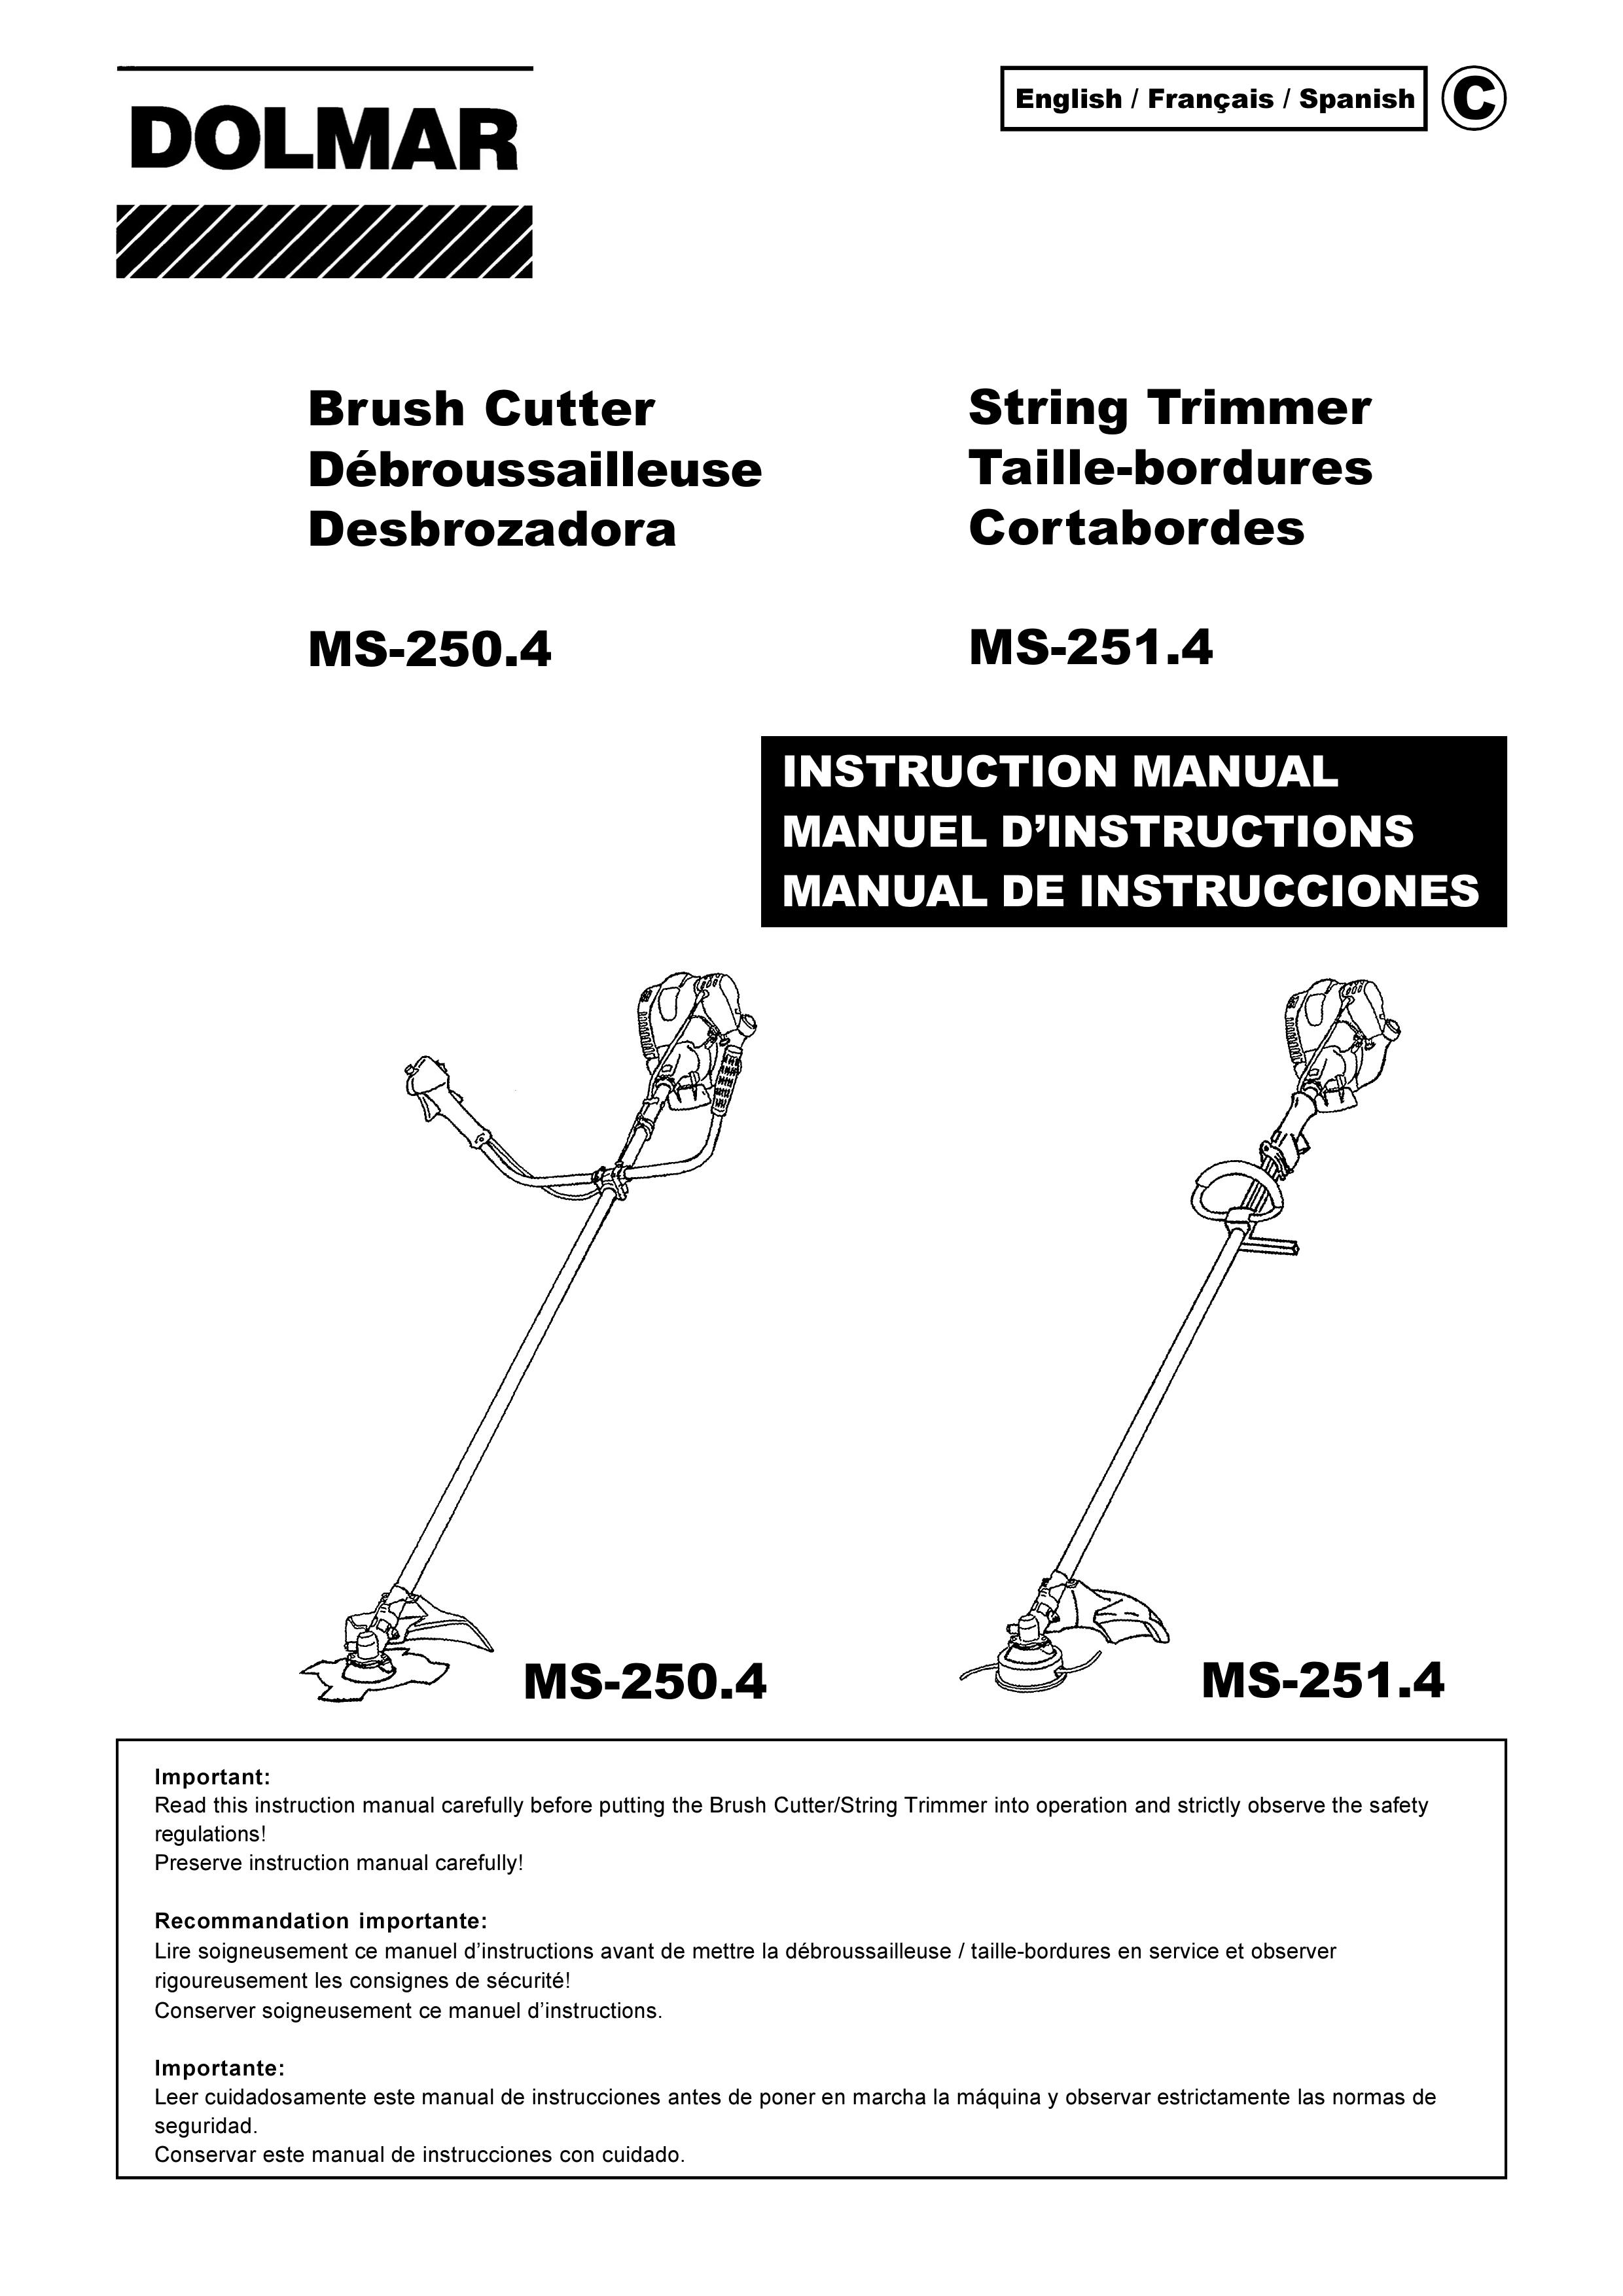 Dolmar MS-250.4 Brush Cutter User Manual